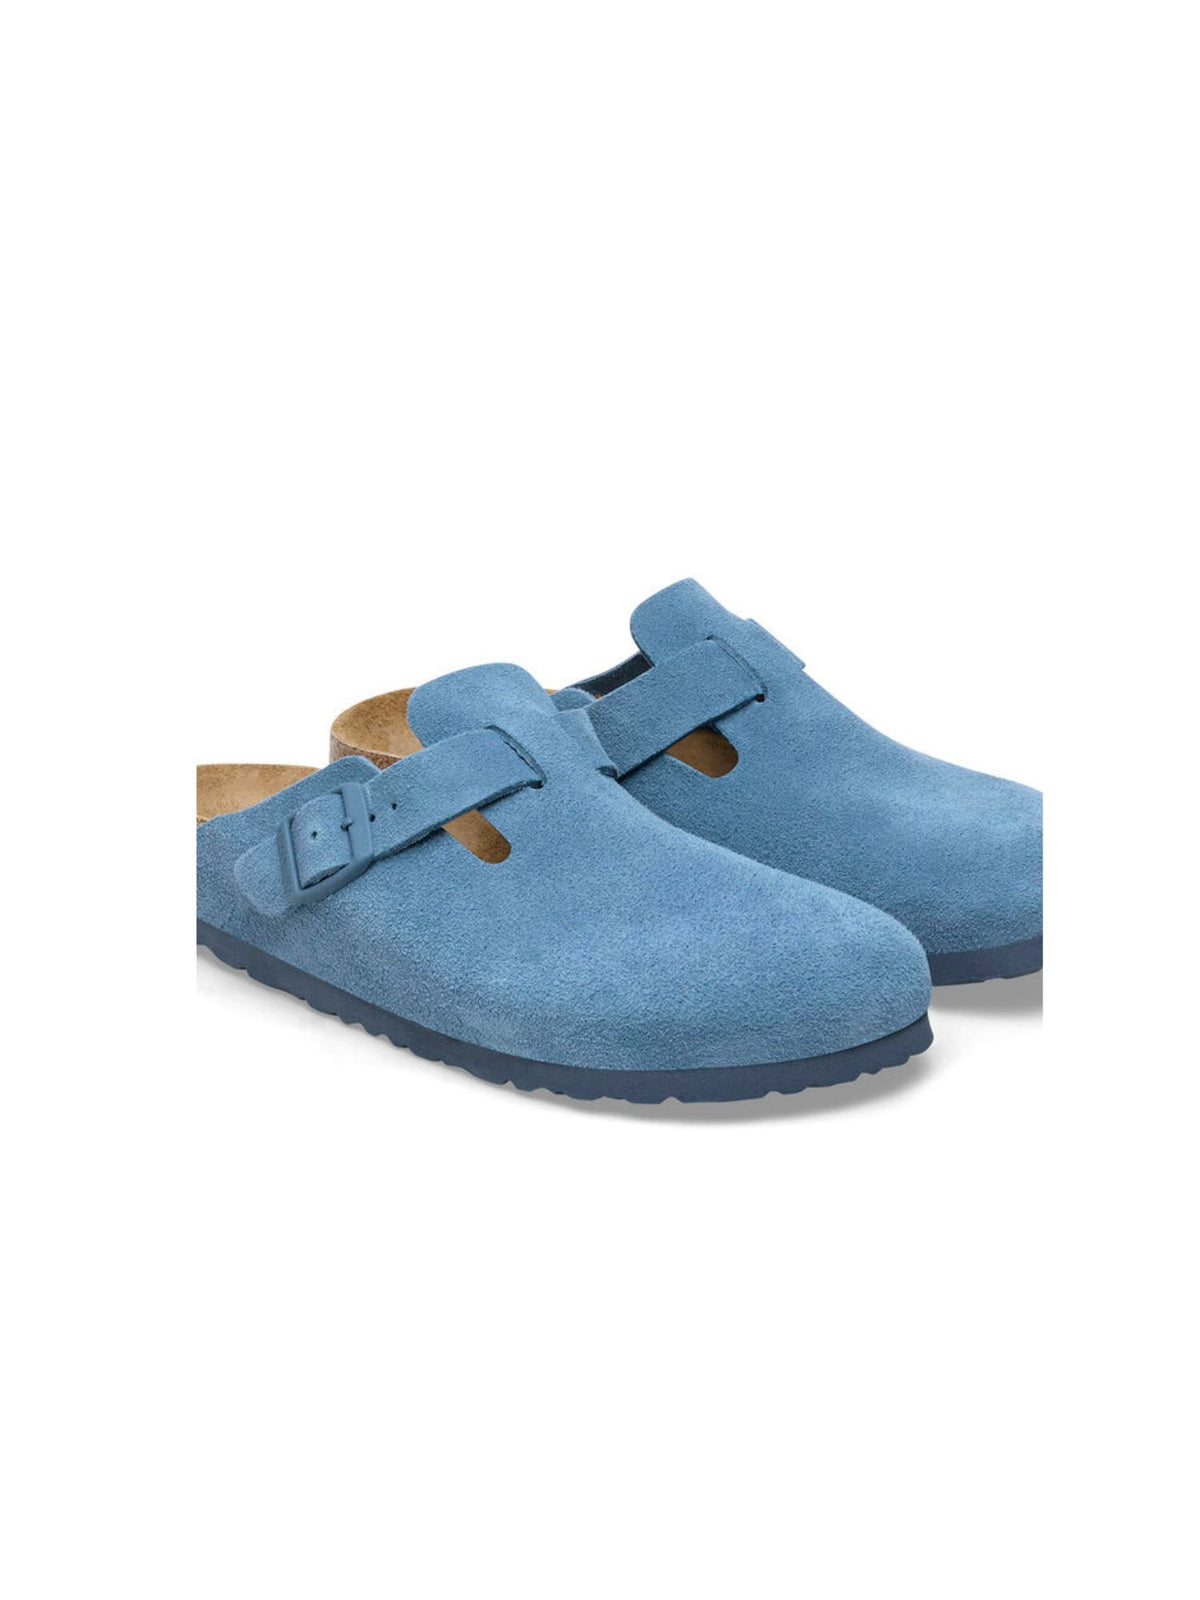 birkenstock boston soft footbed suede clog in elemental blue-pair detail 